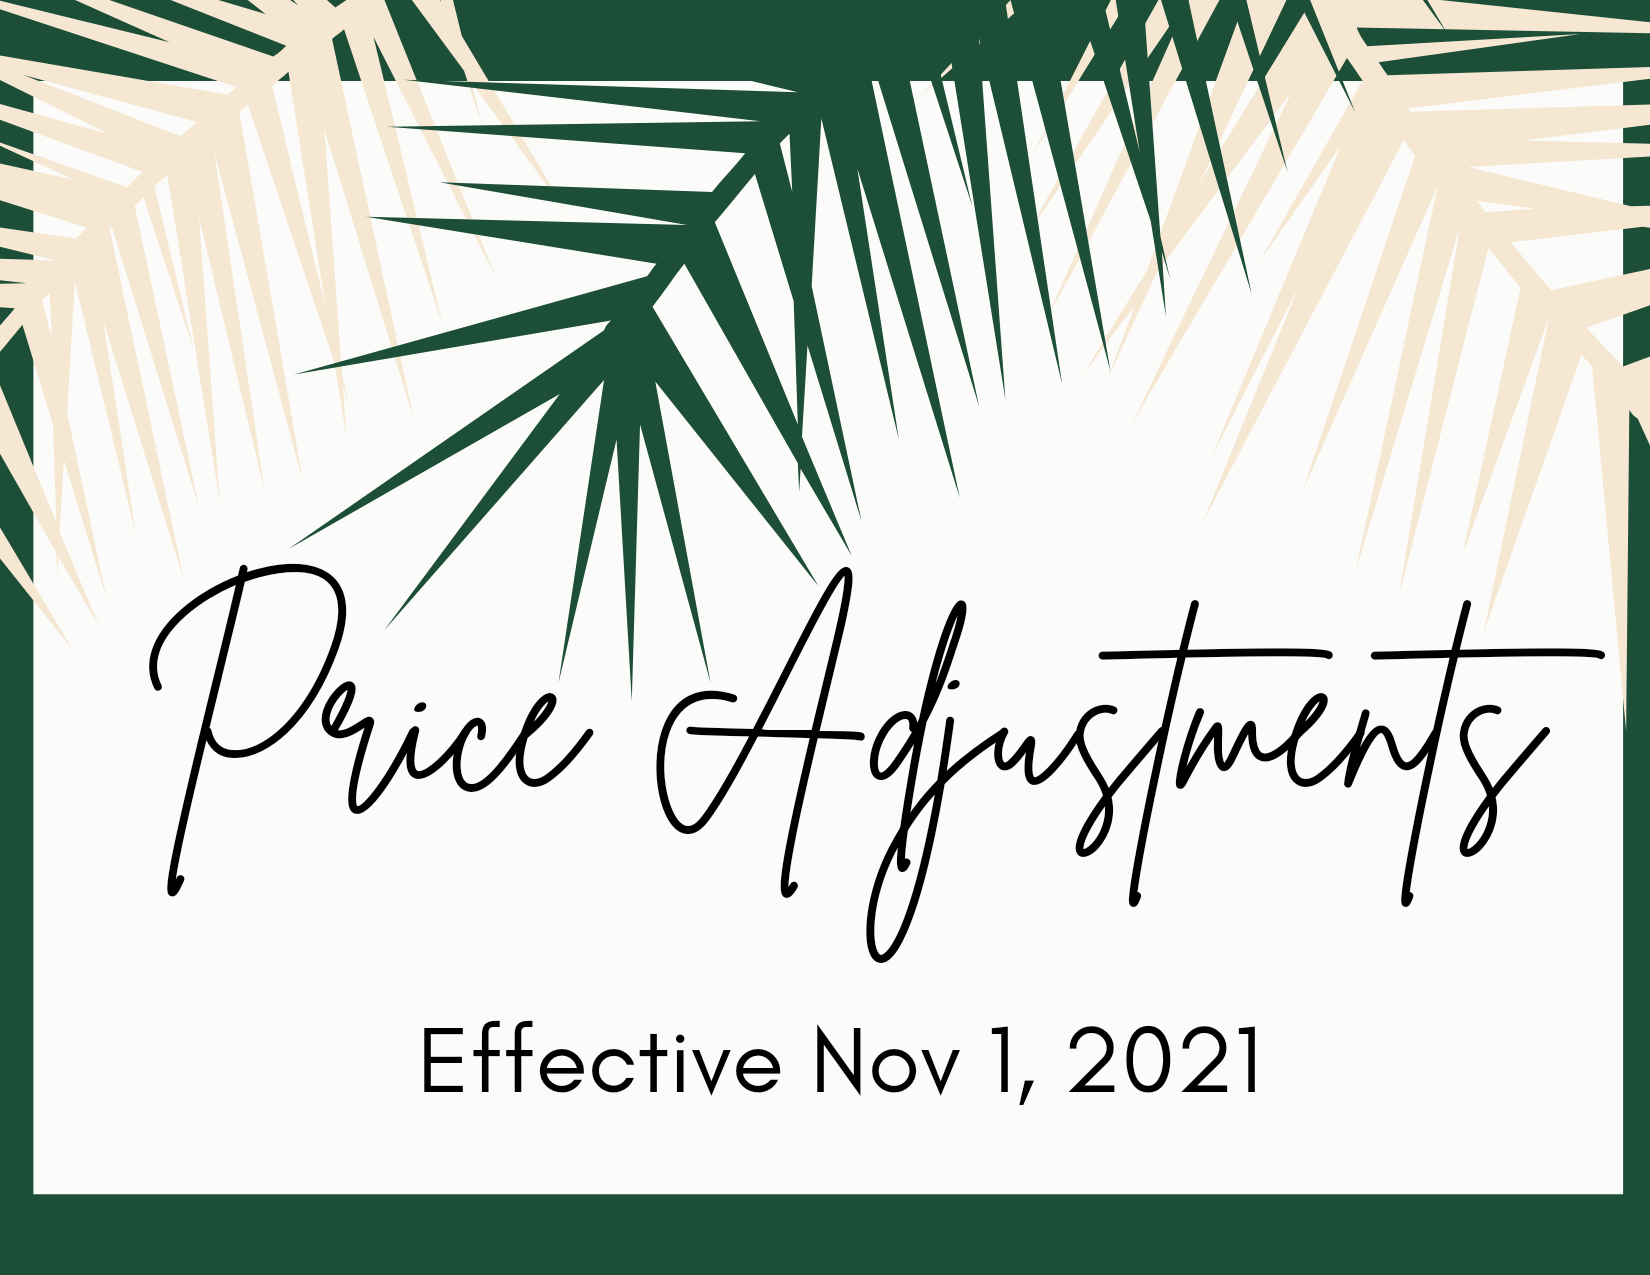 Price Adjustments effective Nov 1, 2021